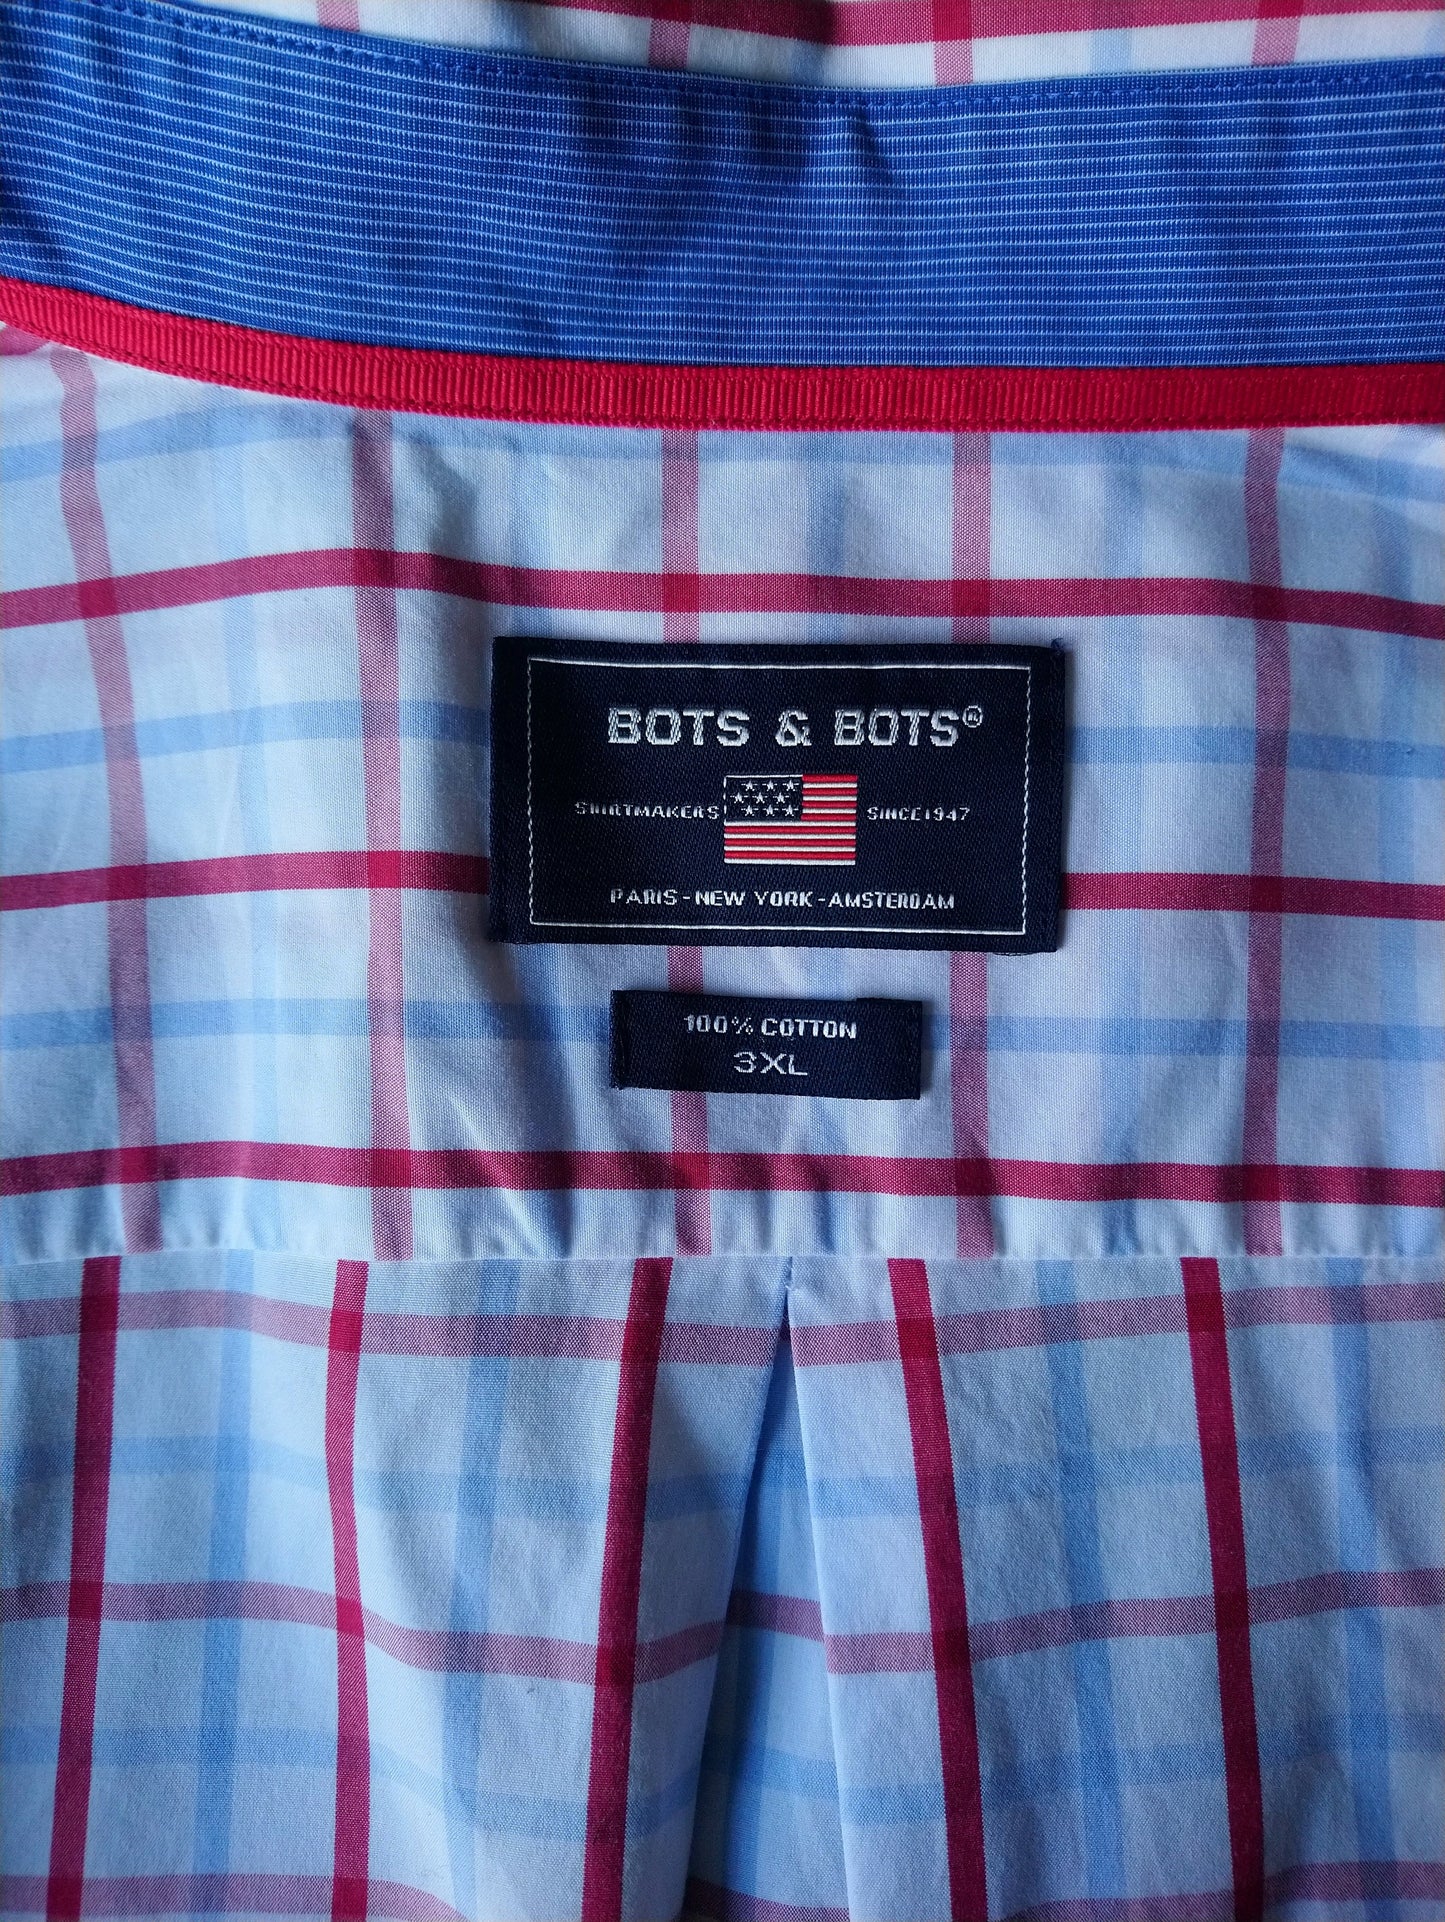 Bots & Bots overhemd. Wit Rood Blauw geruit. Maat XXXL / 3XL.